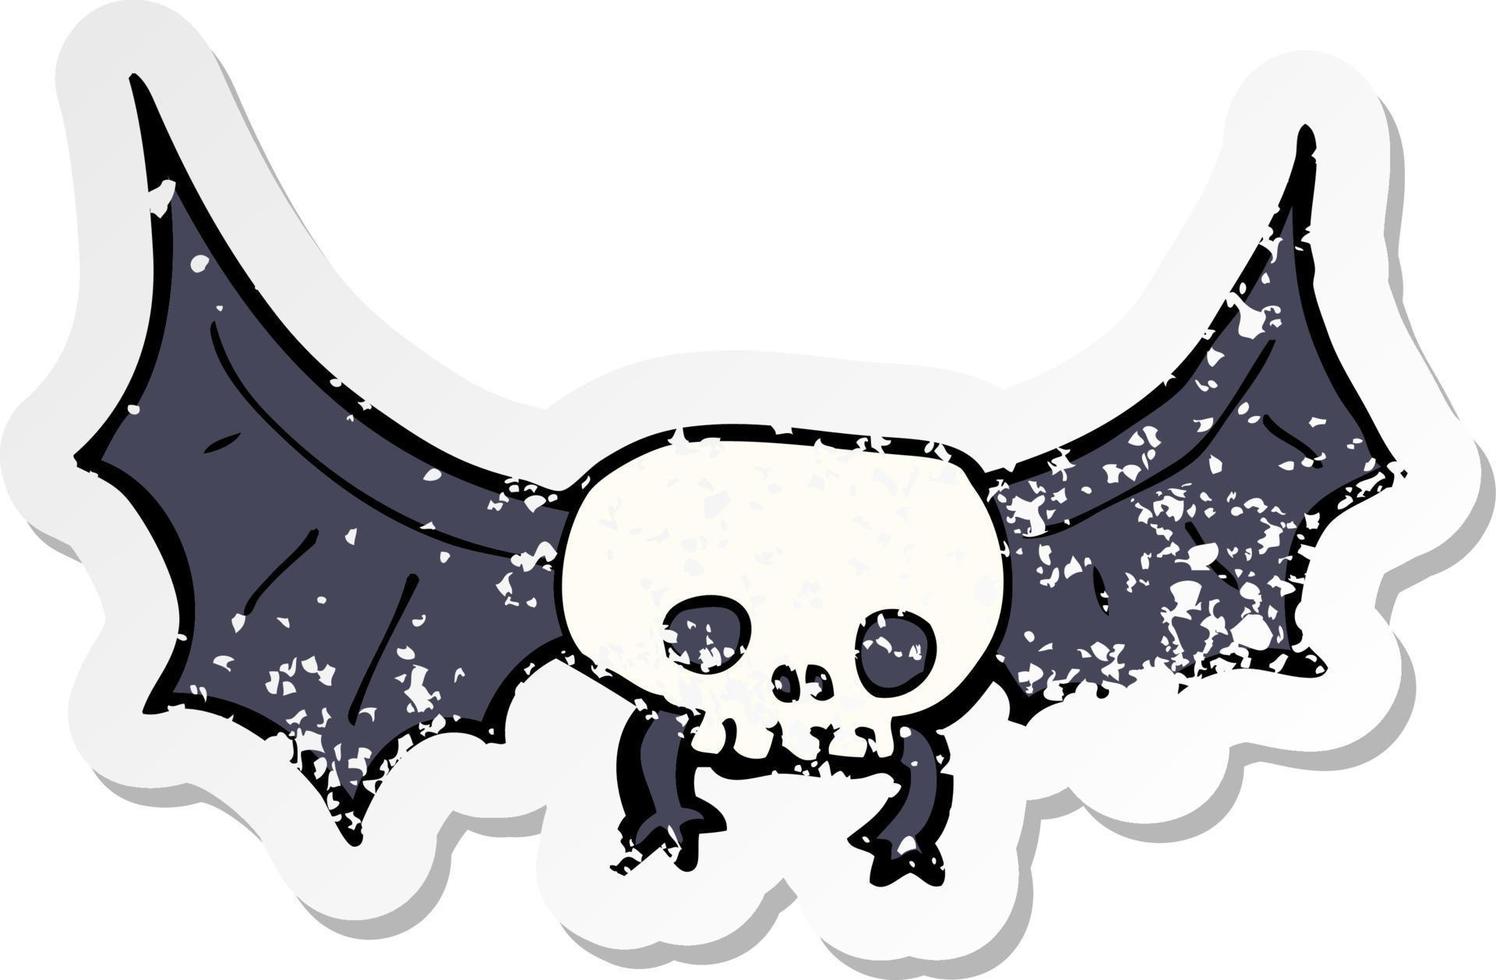 retro distressed sticker of a cartoon spooky skull bat vector